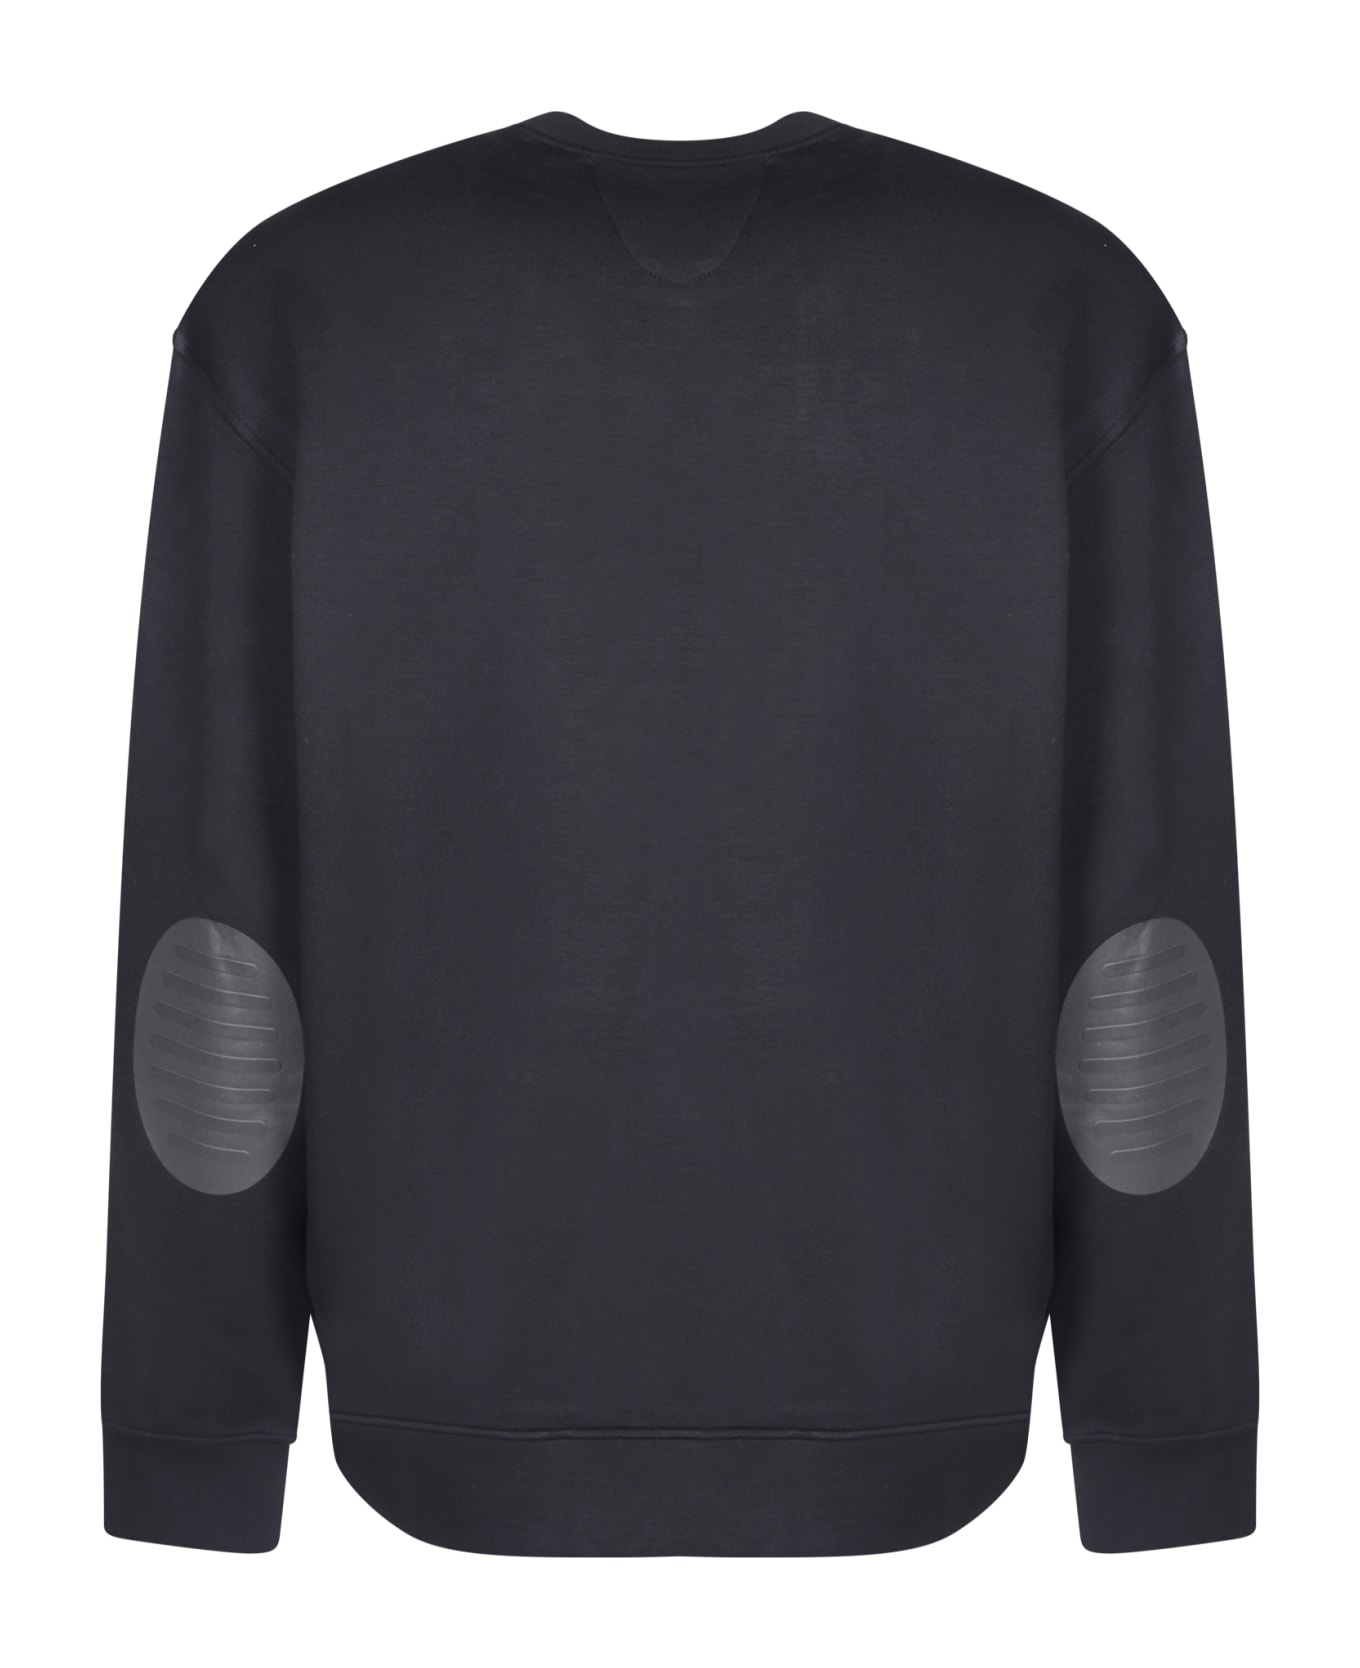 Ferrari Black Scuba Sweater - Black